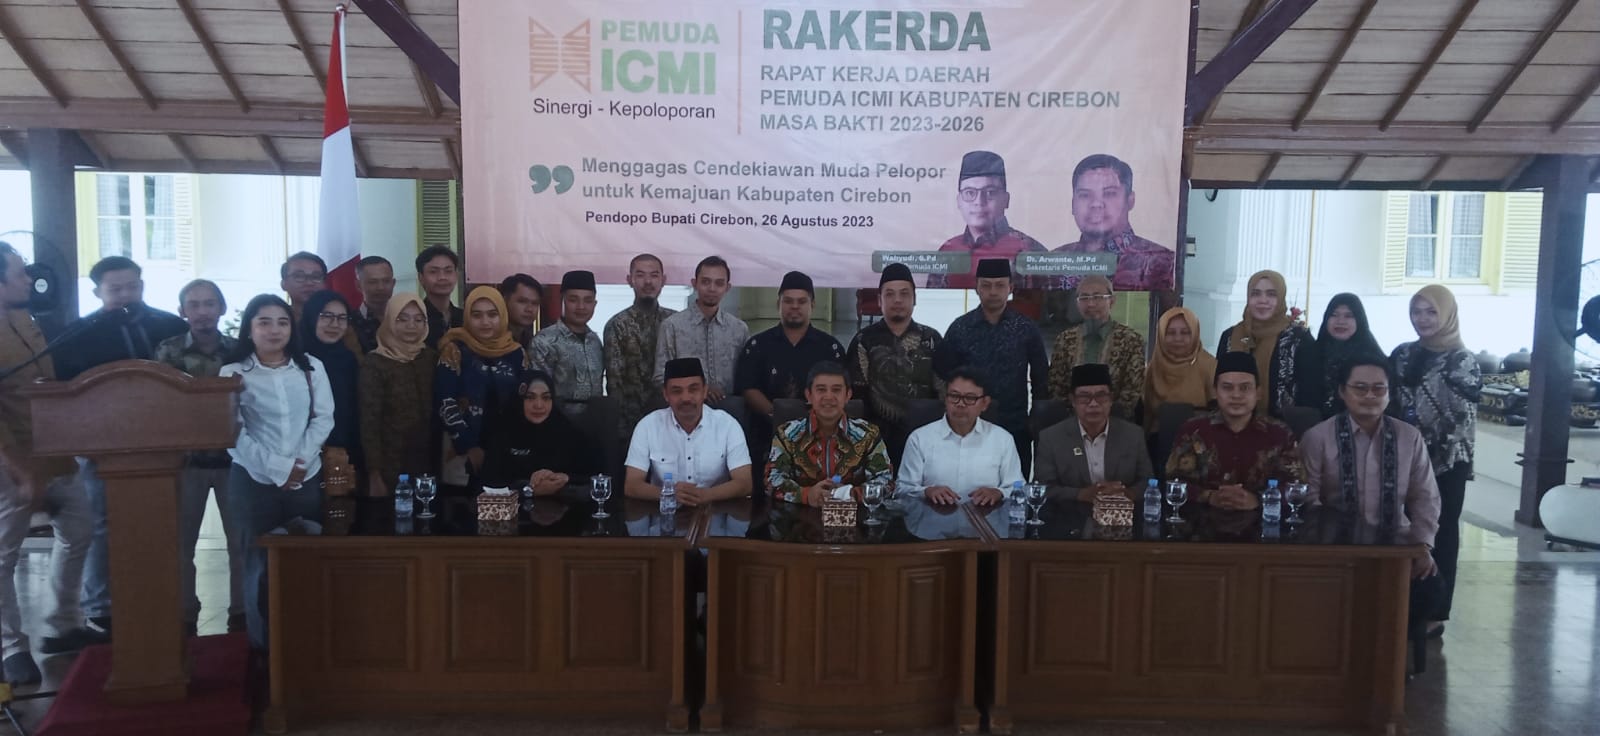 RAKERDA Pemuda ICMI Hasilkan Rekomendasi Gagasan untuk Pembangunan Kabupaten Cirebon